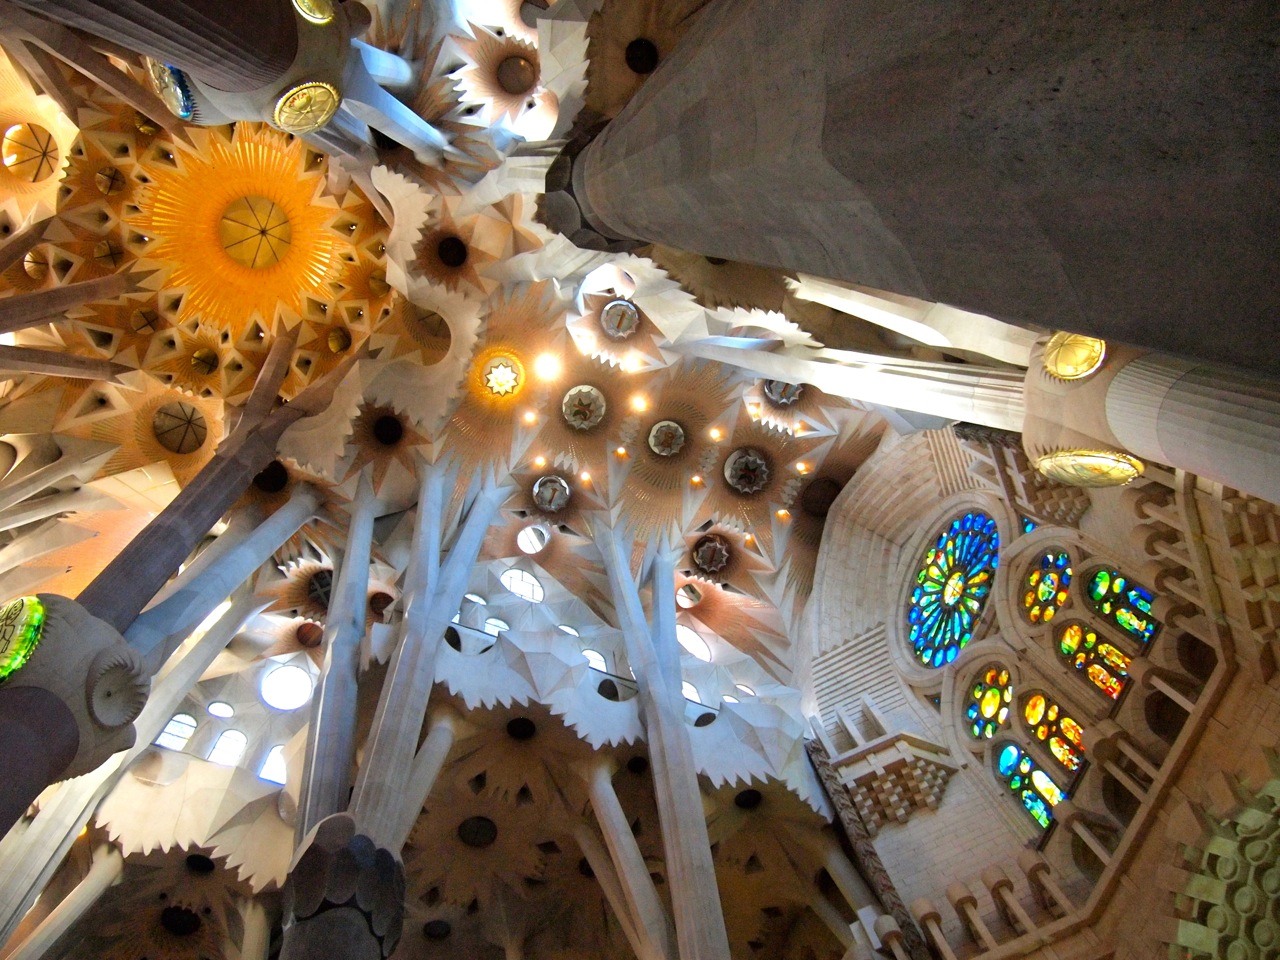 Sagrada Familia in Barcelona